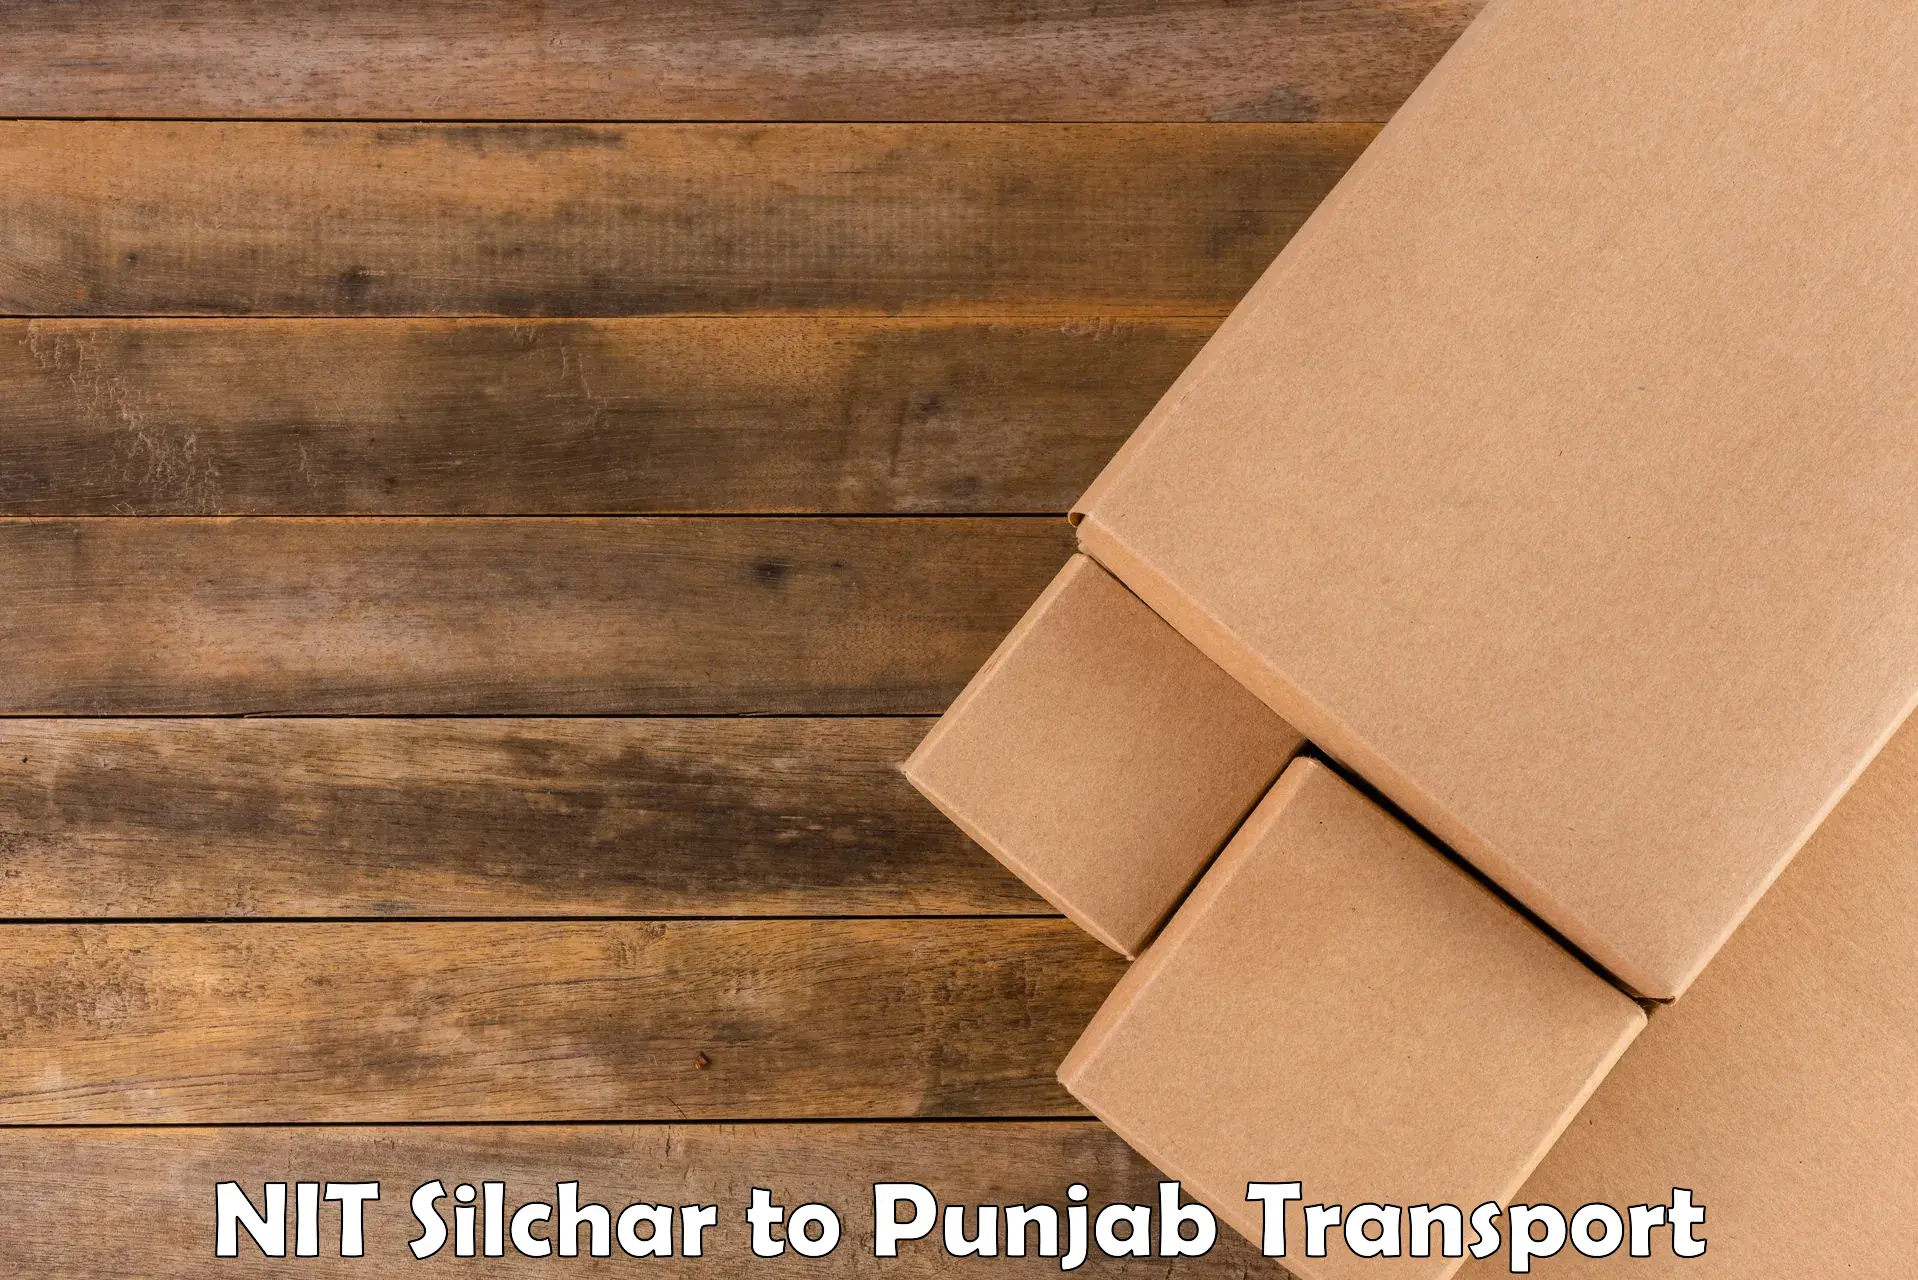 Online transport service NIT Silchar to Firozpur